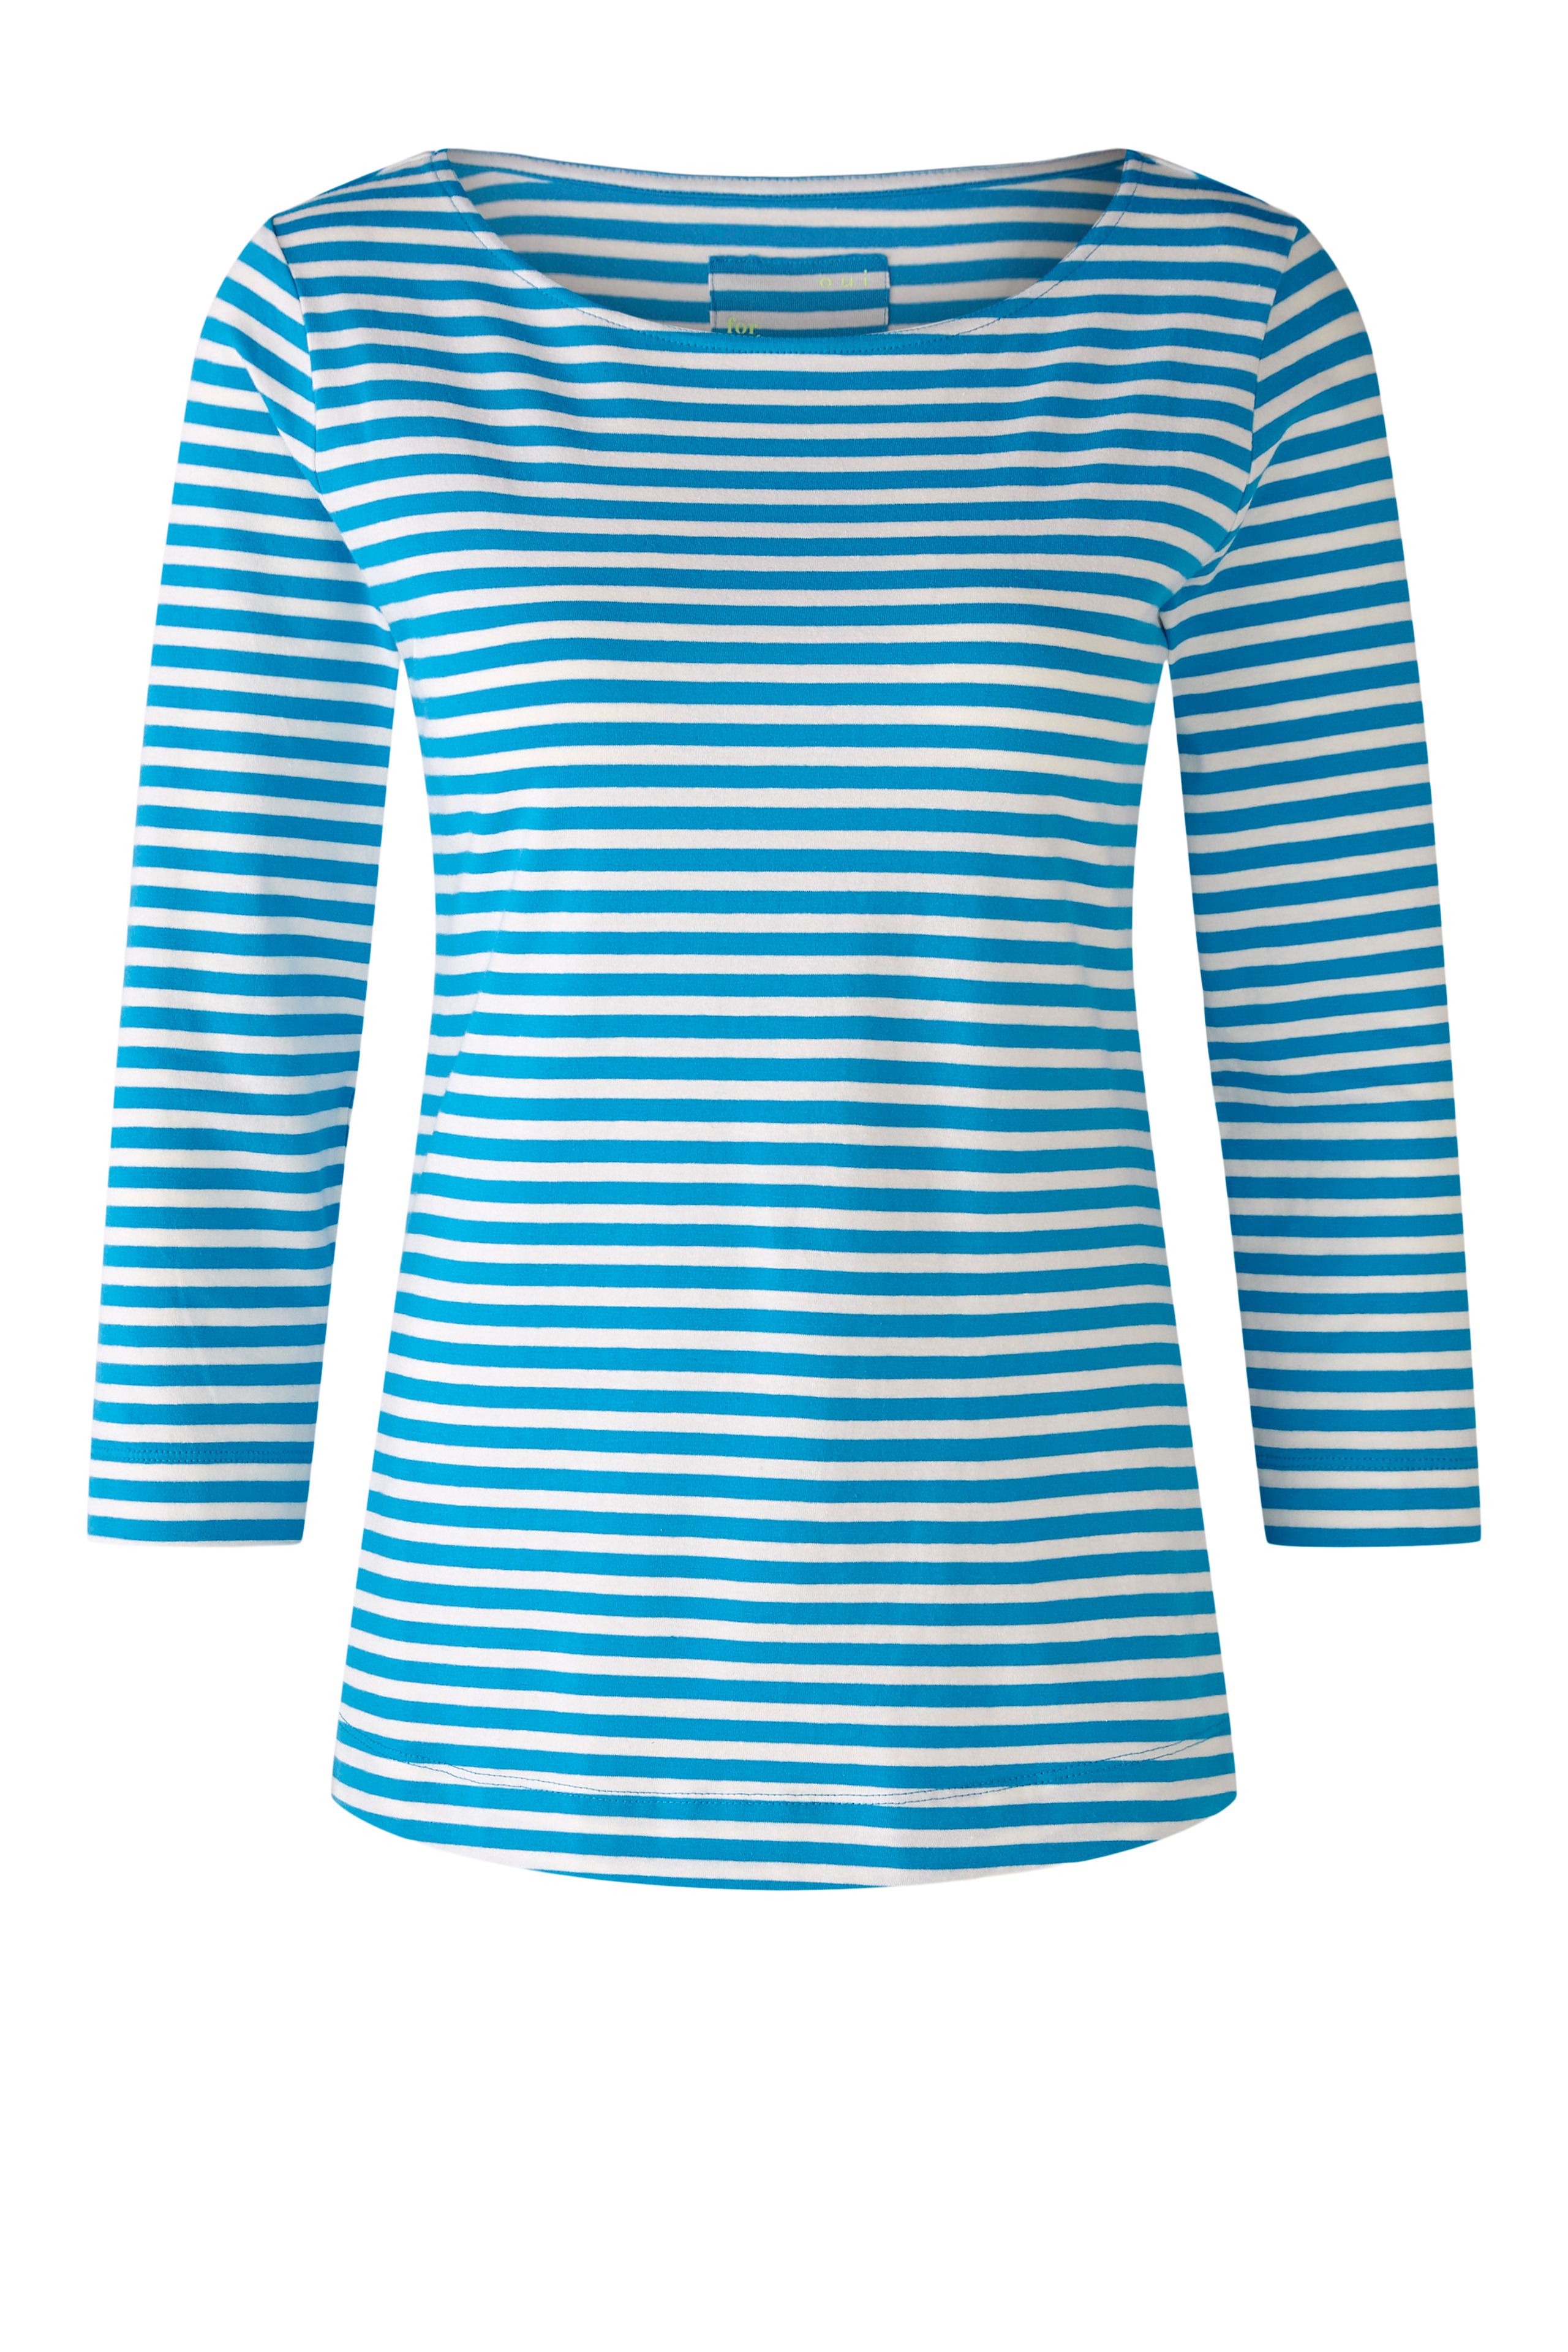 Oui T-Shirt 3/4 Arm  fine Stripe 42 light blue